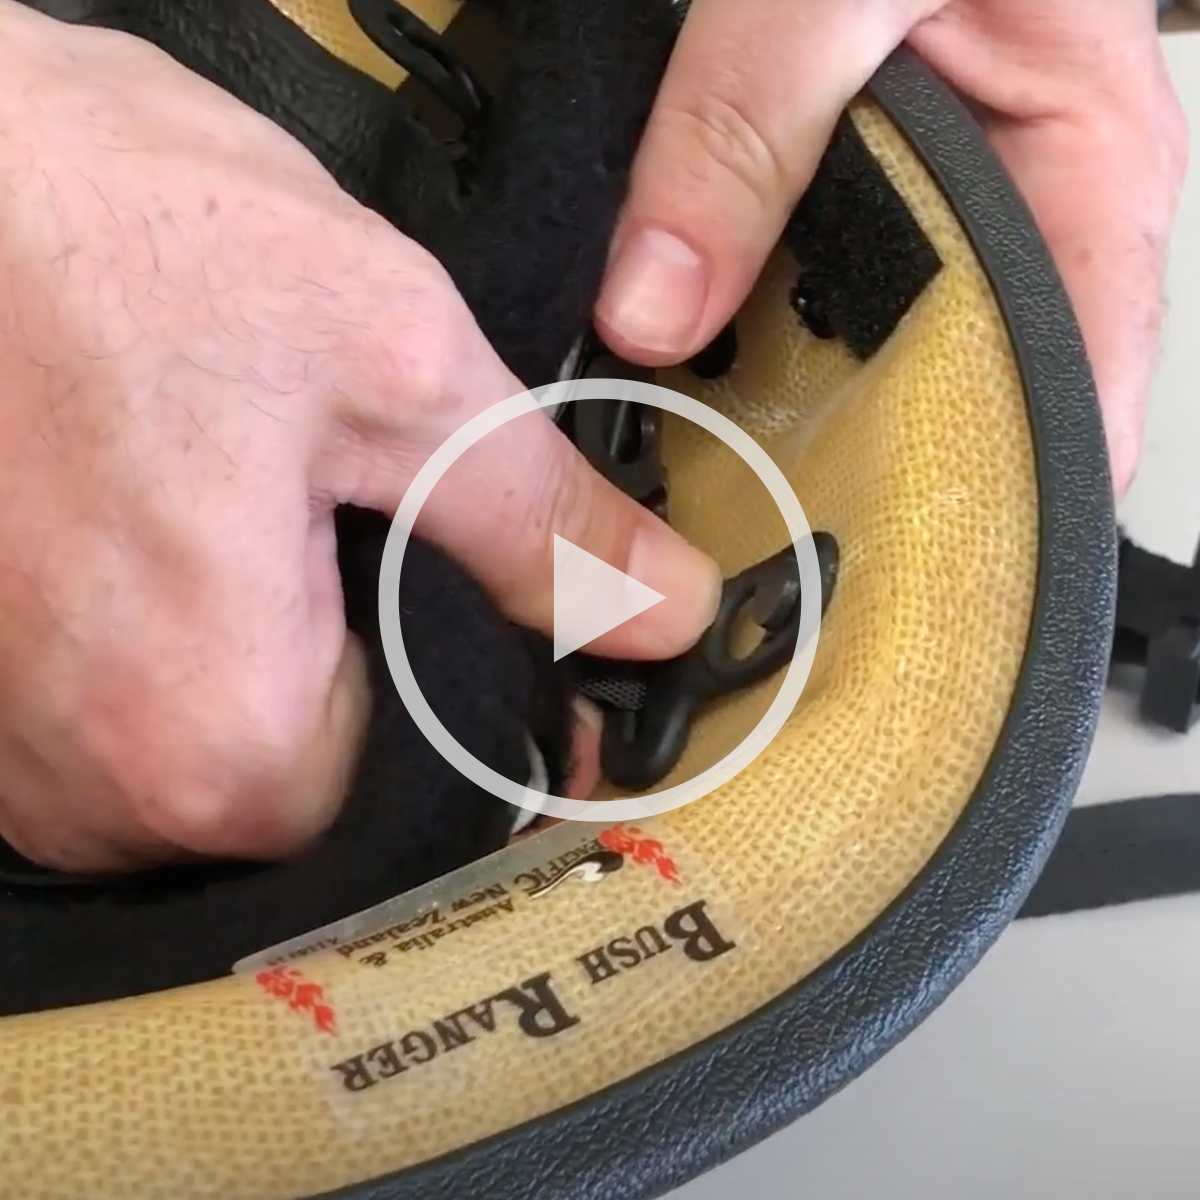 New Video: Basic Maintenance on a Pacific BR9 Wildland Firefighting Helmet